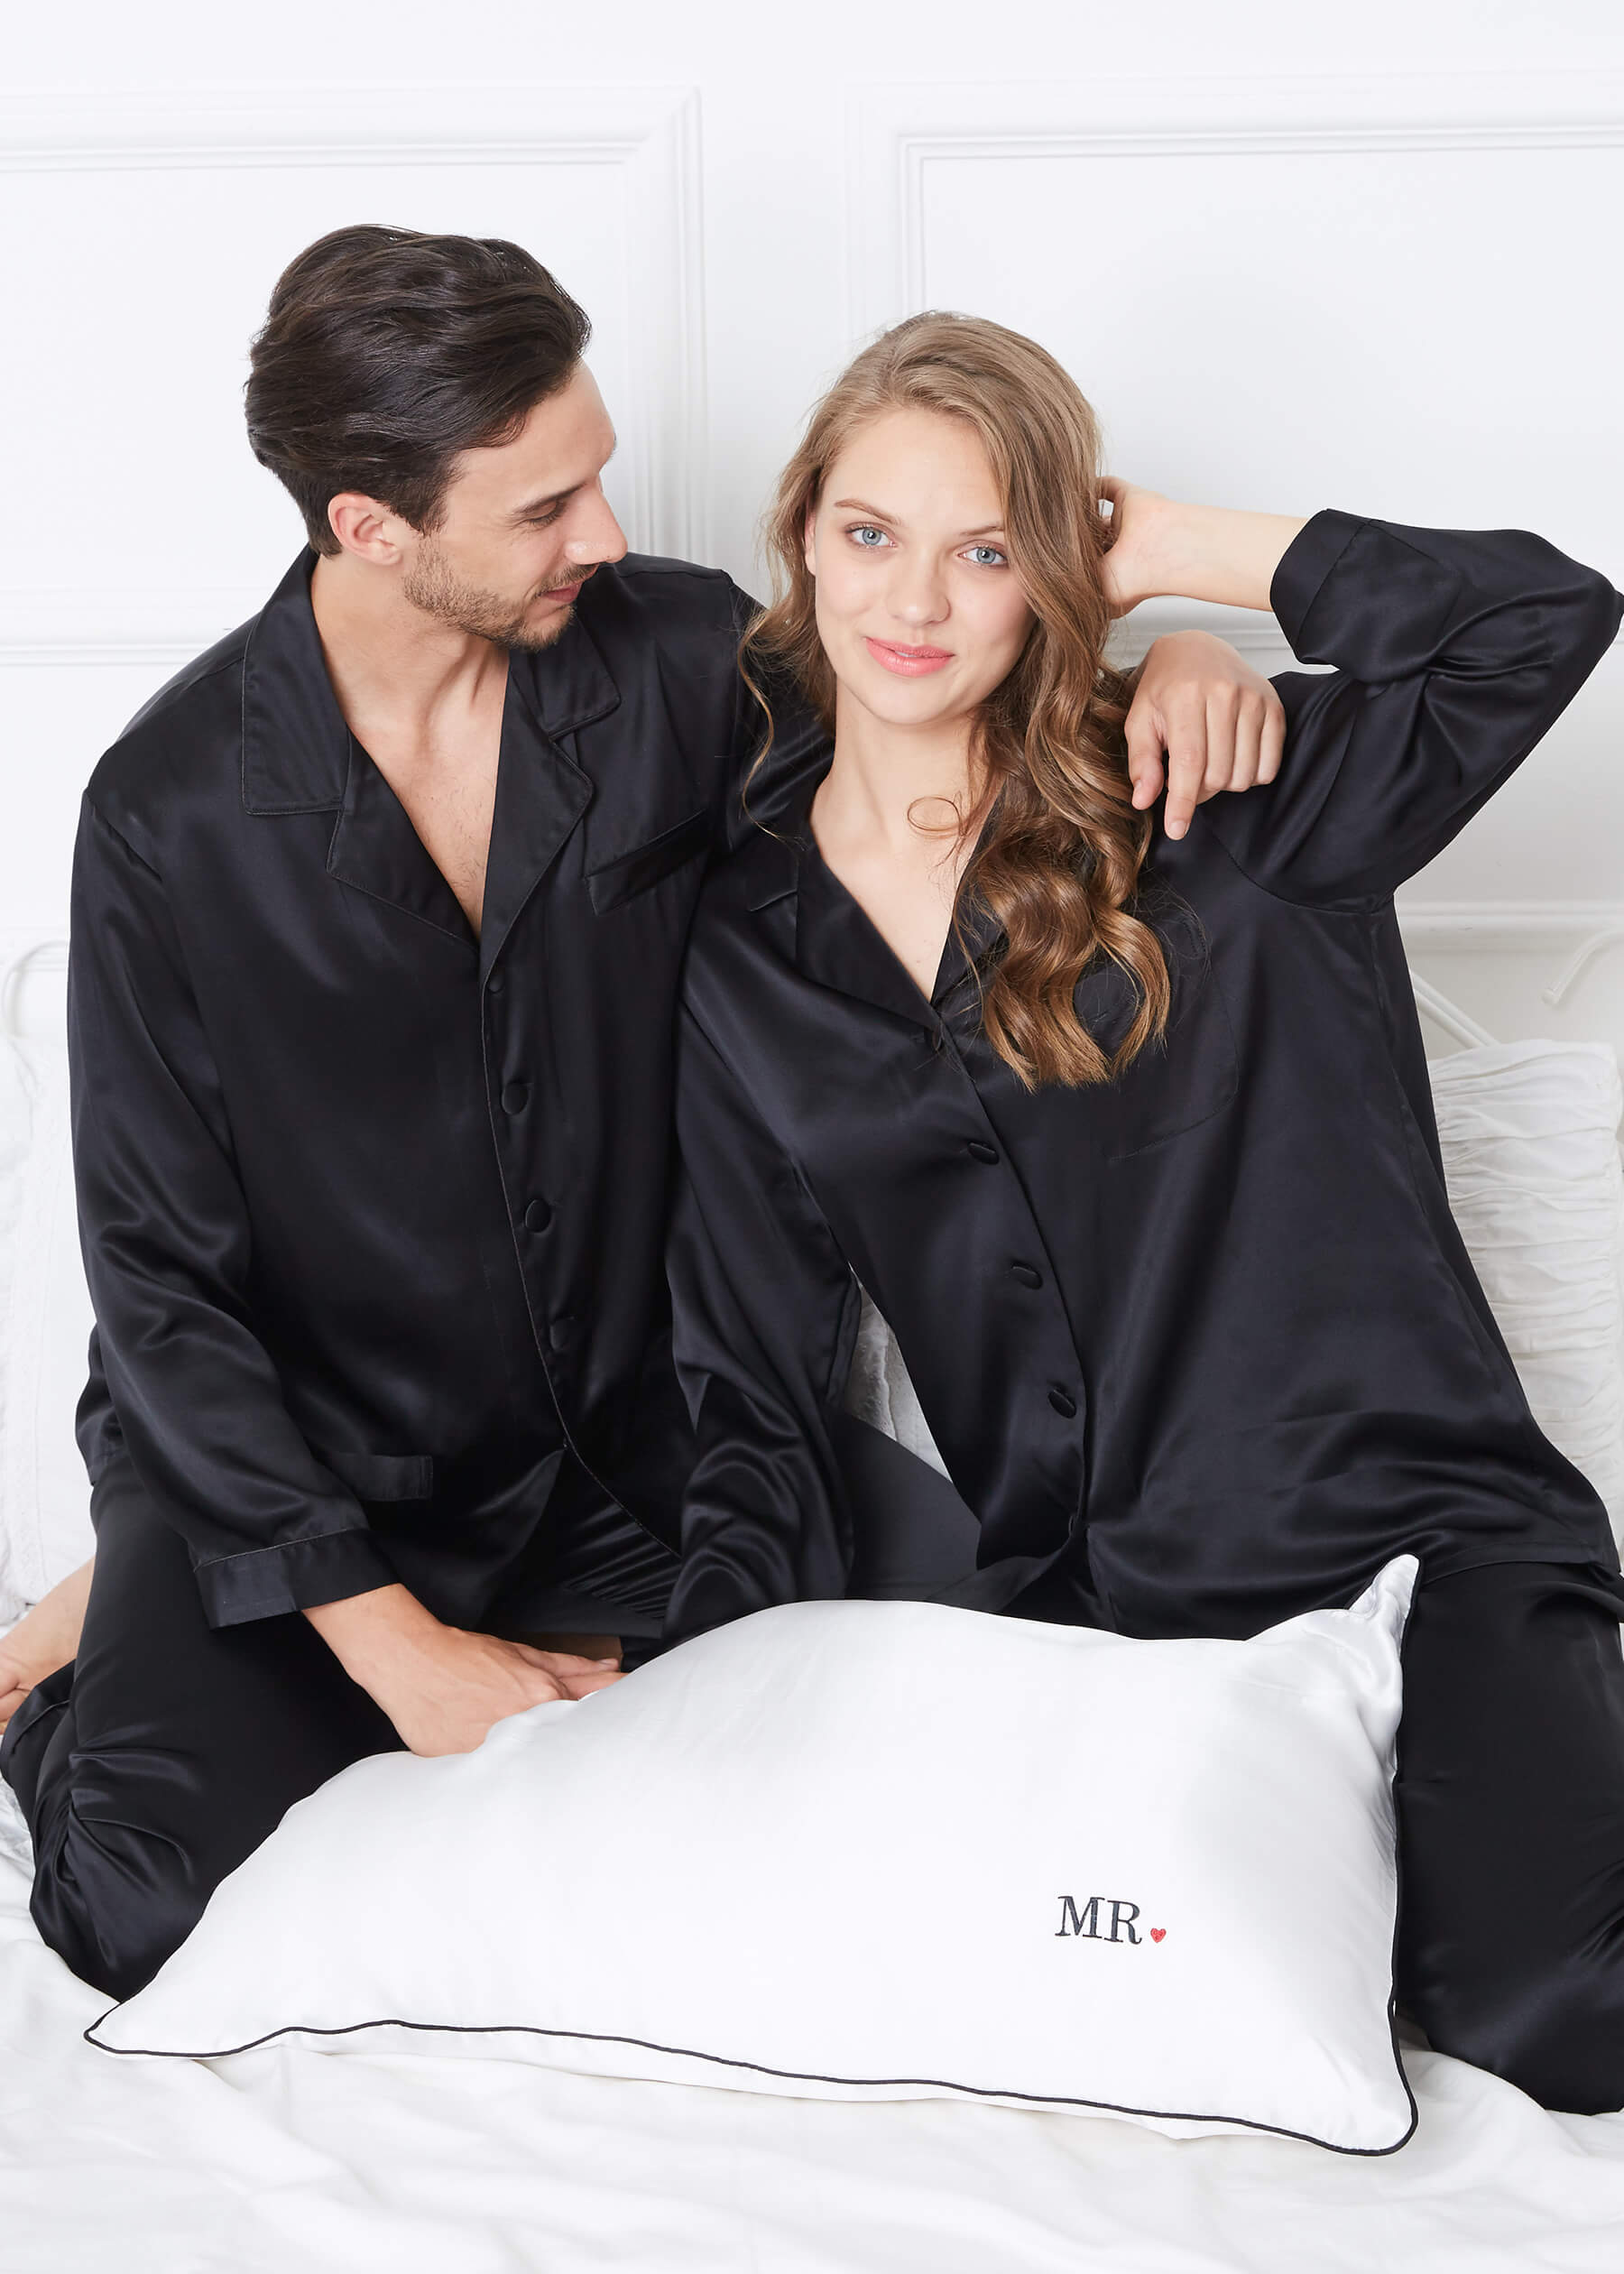 Couple Nightwear – MidNight Angels by PC